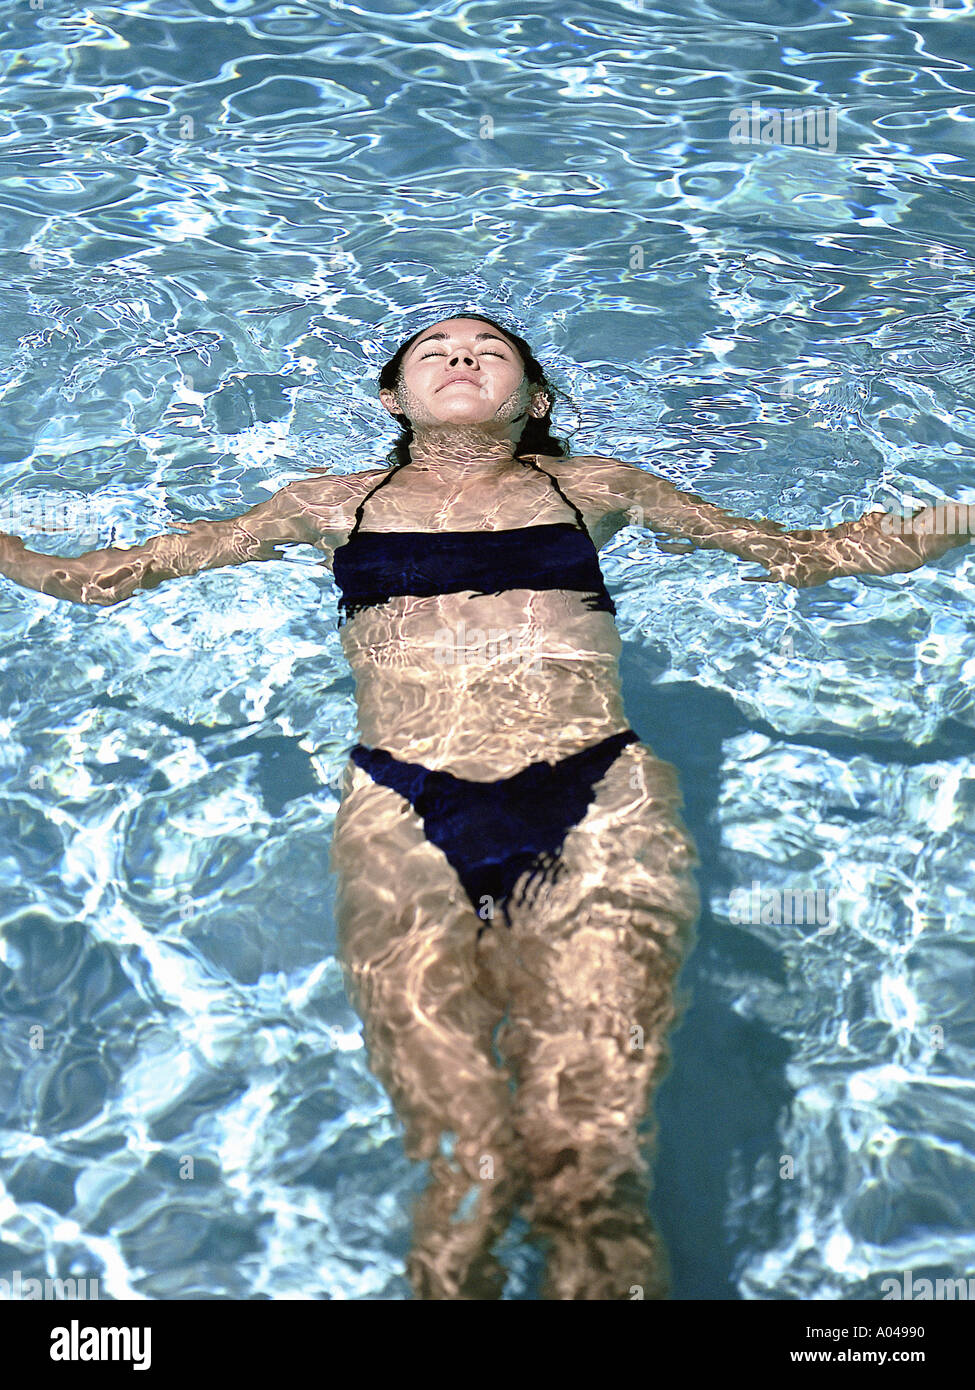 Young woman wearing black bikini floating on her back in a pool Stock Photo